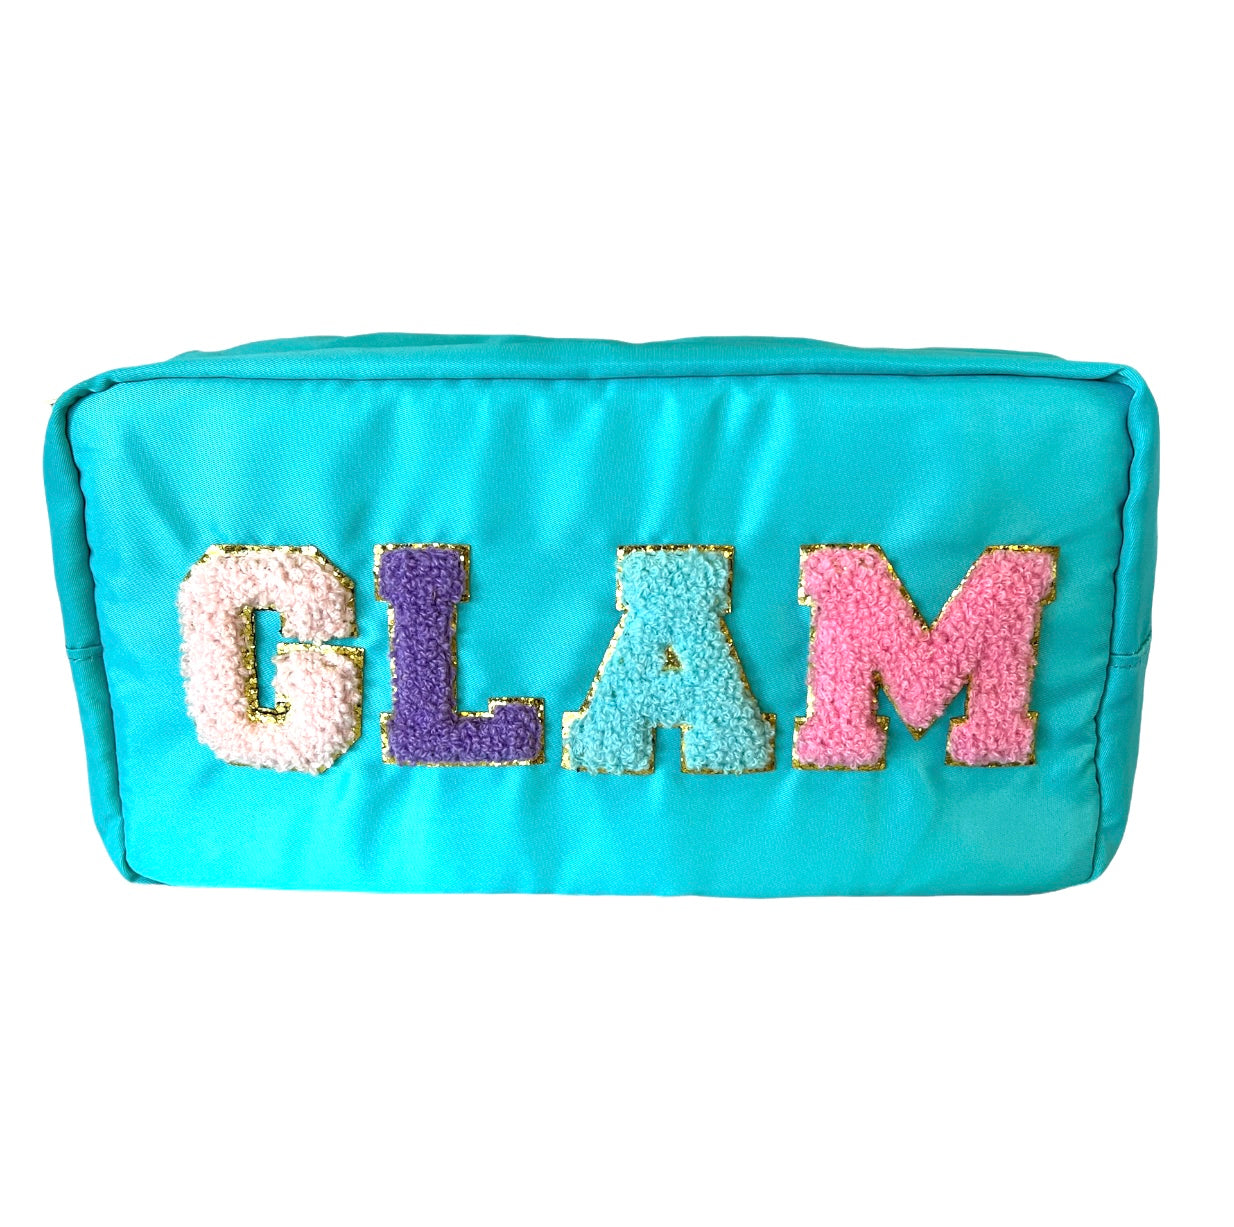 107B Little Glam Bag Kit by Pink Sand Beach Designs